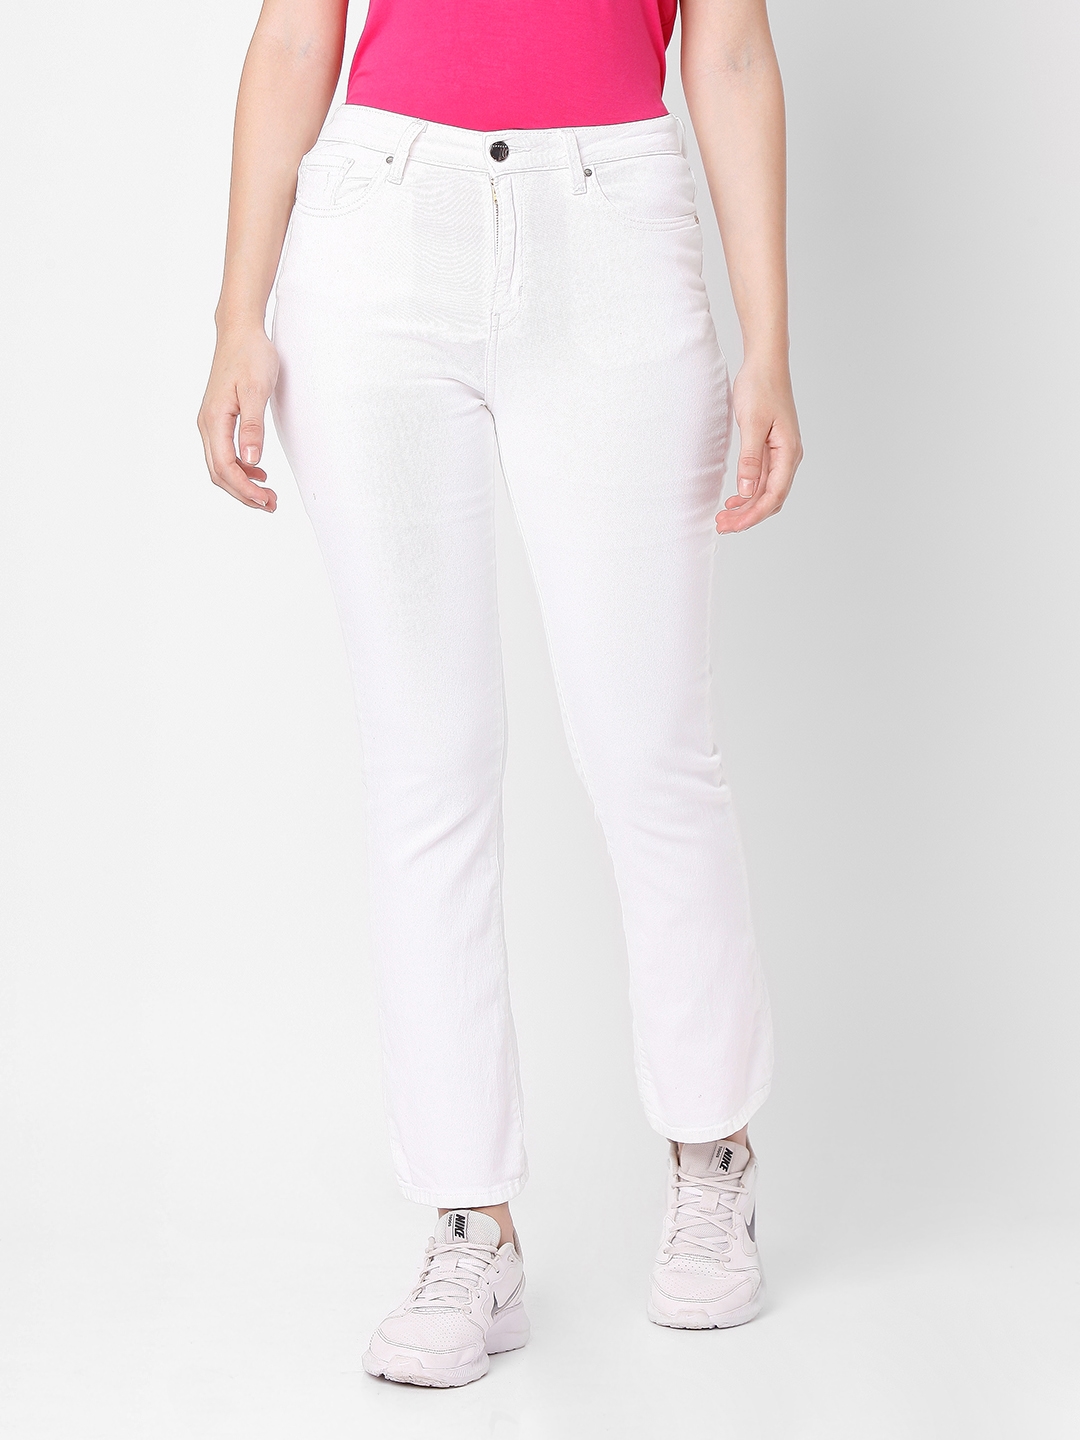 Women's White Cotton Solid Slim Jeans